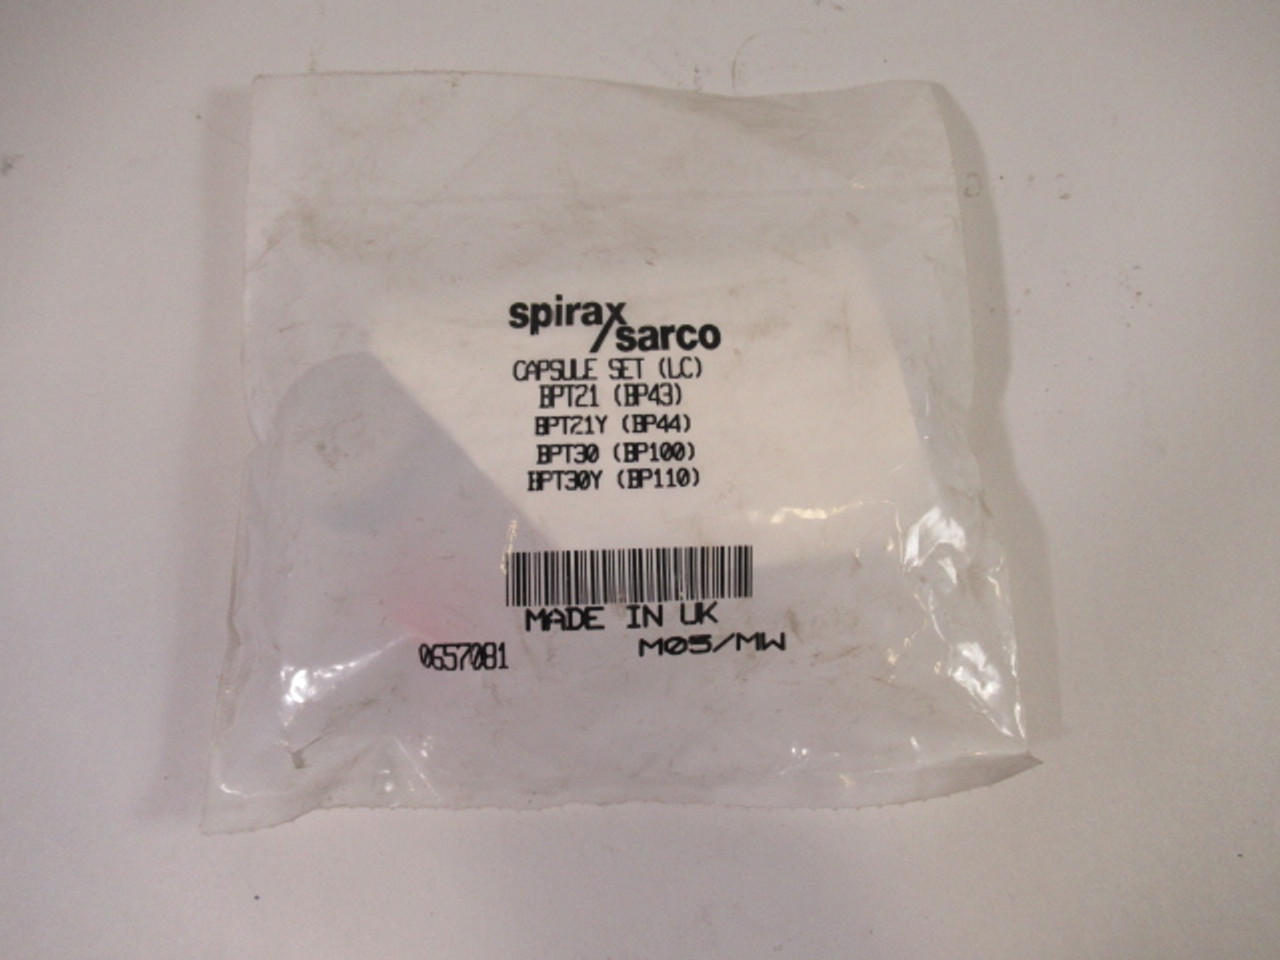 Spirax Sarco 0657081 Capsule Set (LC) Trap 3/4"NPT ! NEW !